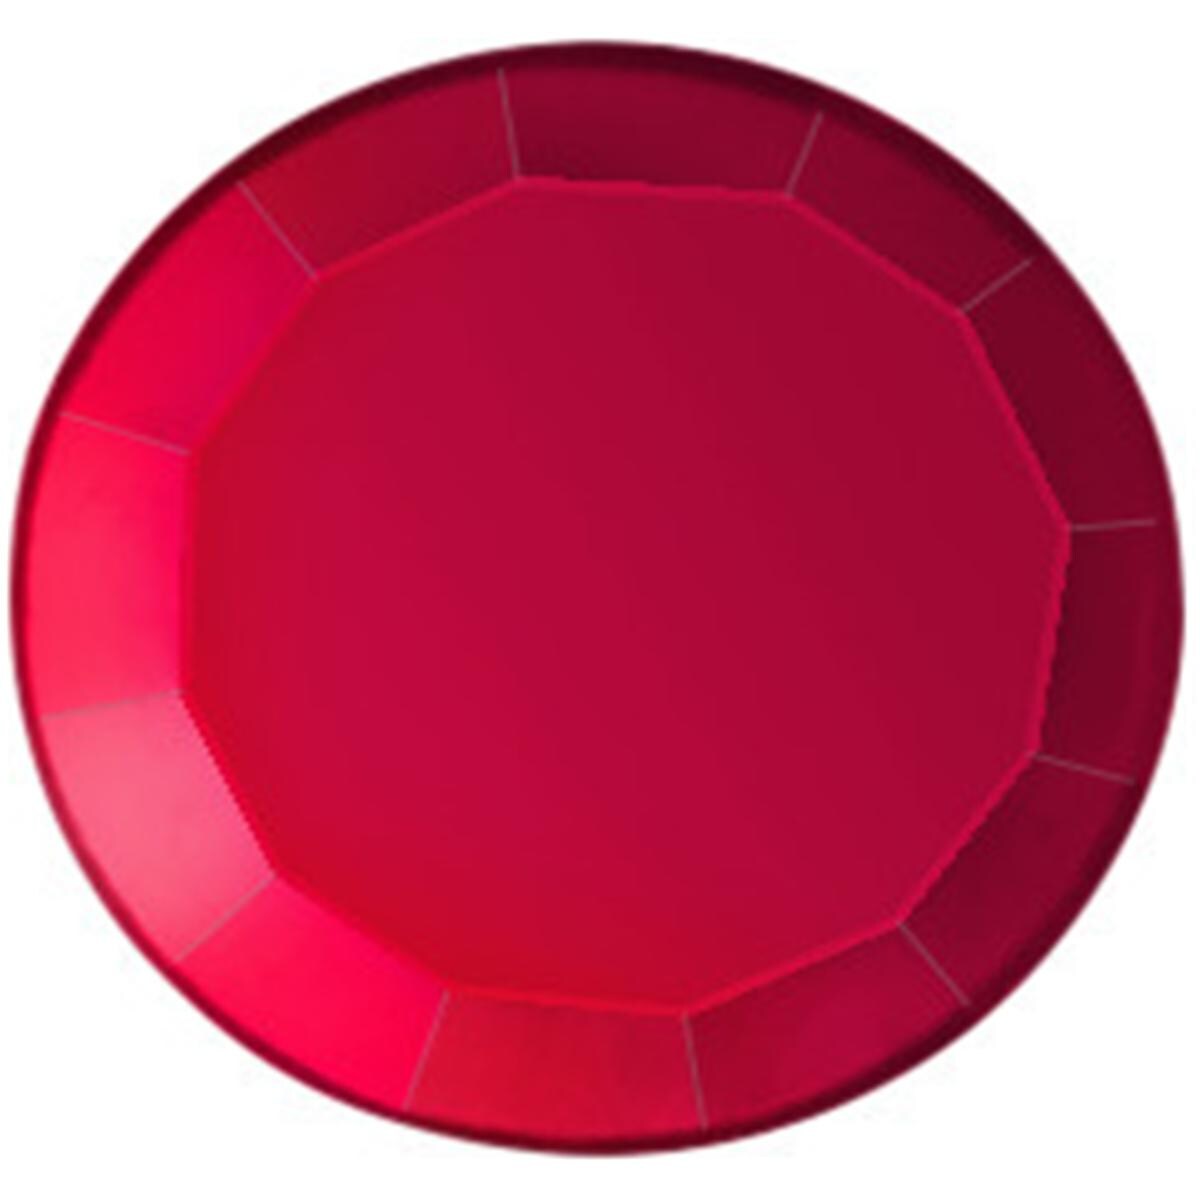 Prodental® Jewels, Ø 1,8 mm - Rot / Ruby, Packung 1 Stück